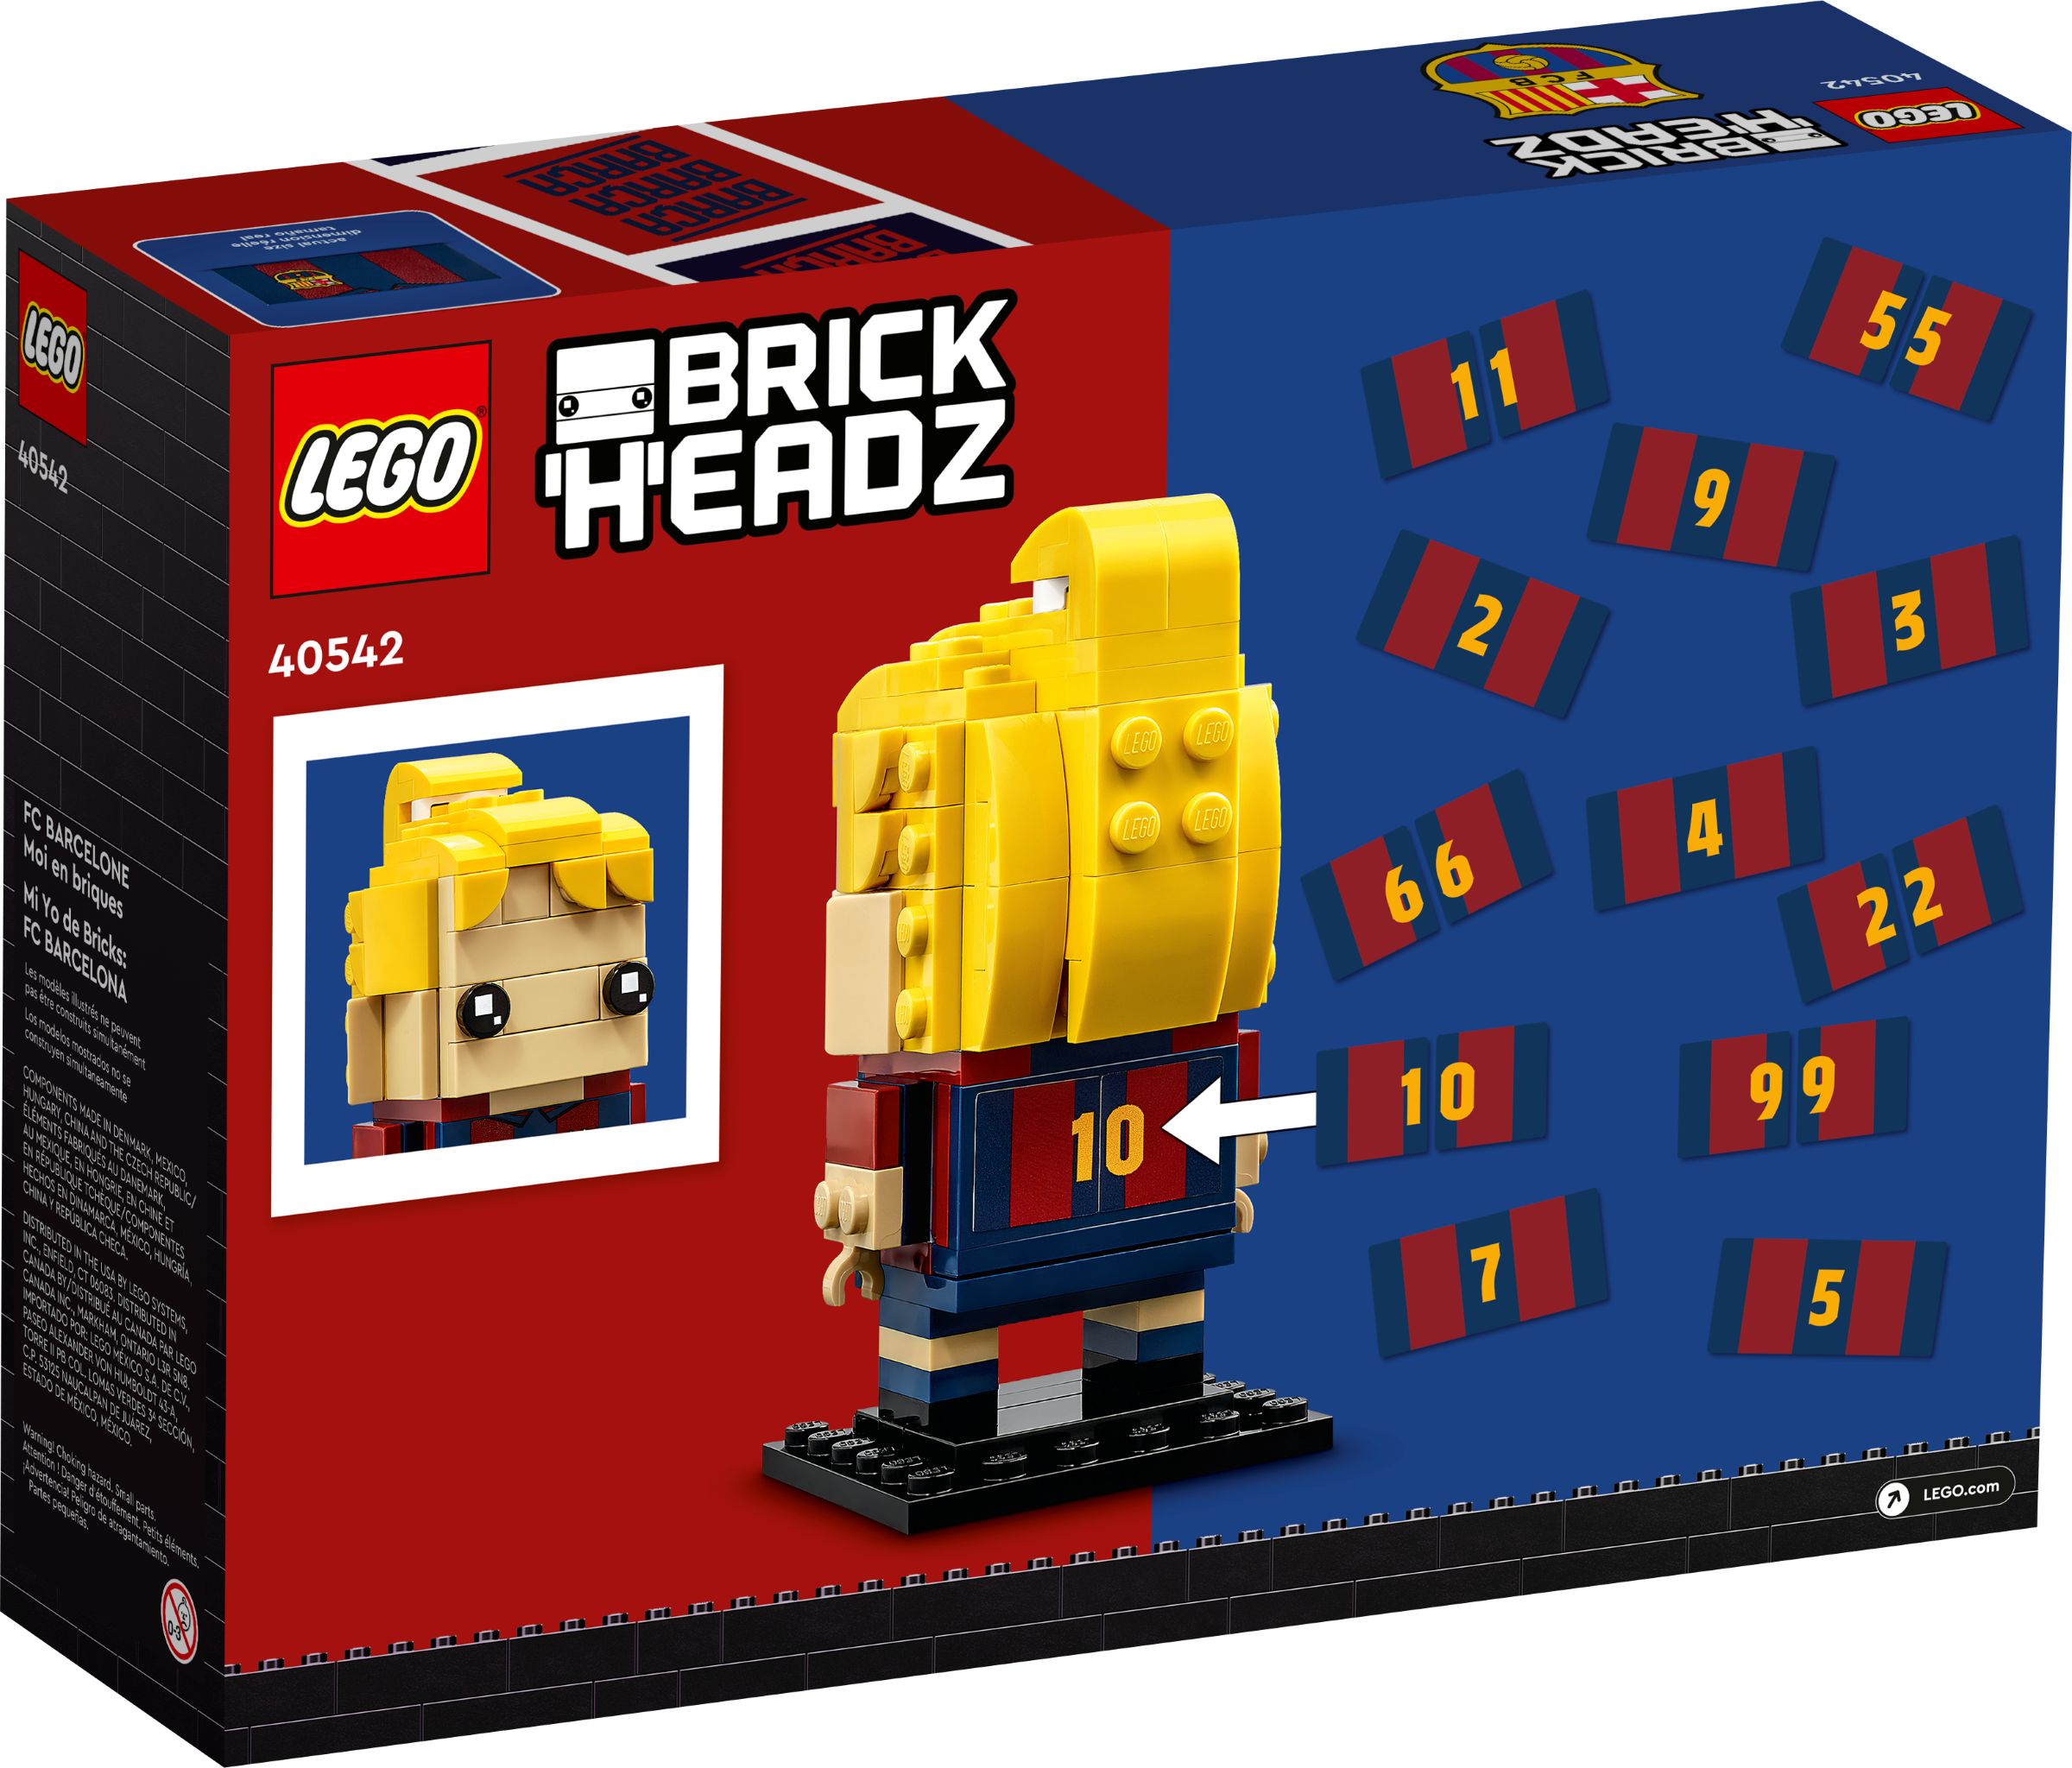 LEGO BrickHeadz 40542 FC Barcelona Go Brick Me LEGO_40542_alt9.jpg